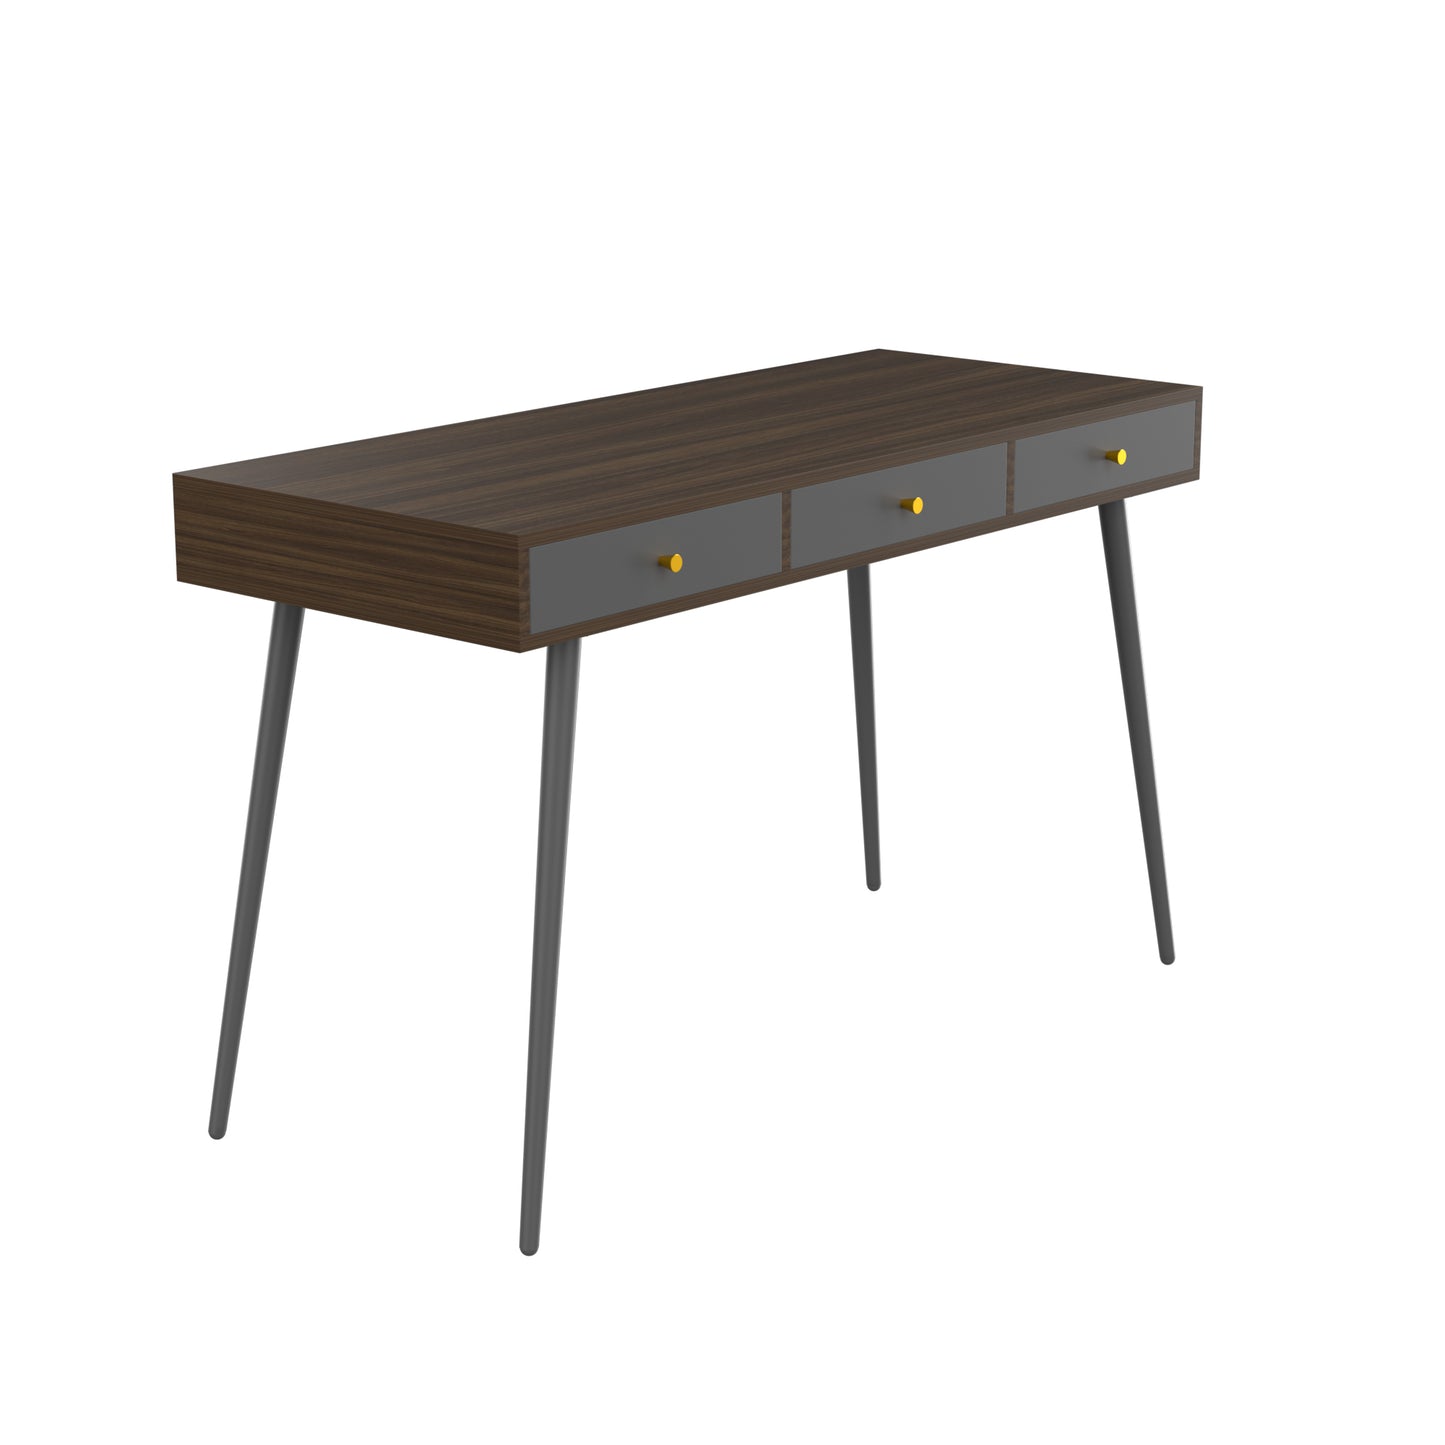 Update Writing Desk 47inch with 3 Drawers|Modern Mid Century Desk for Home Office (Walnut + Dark Grey)